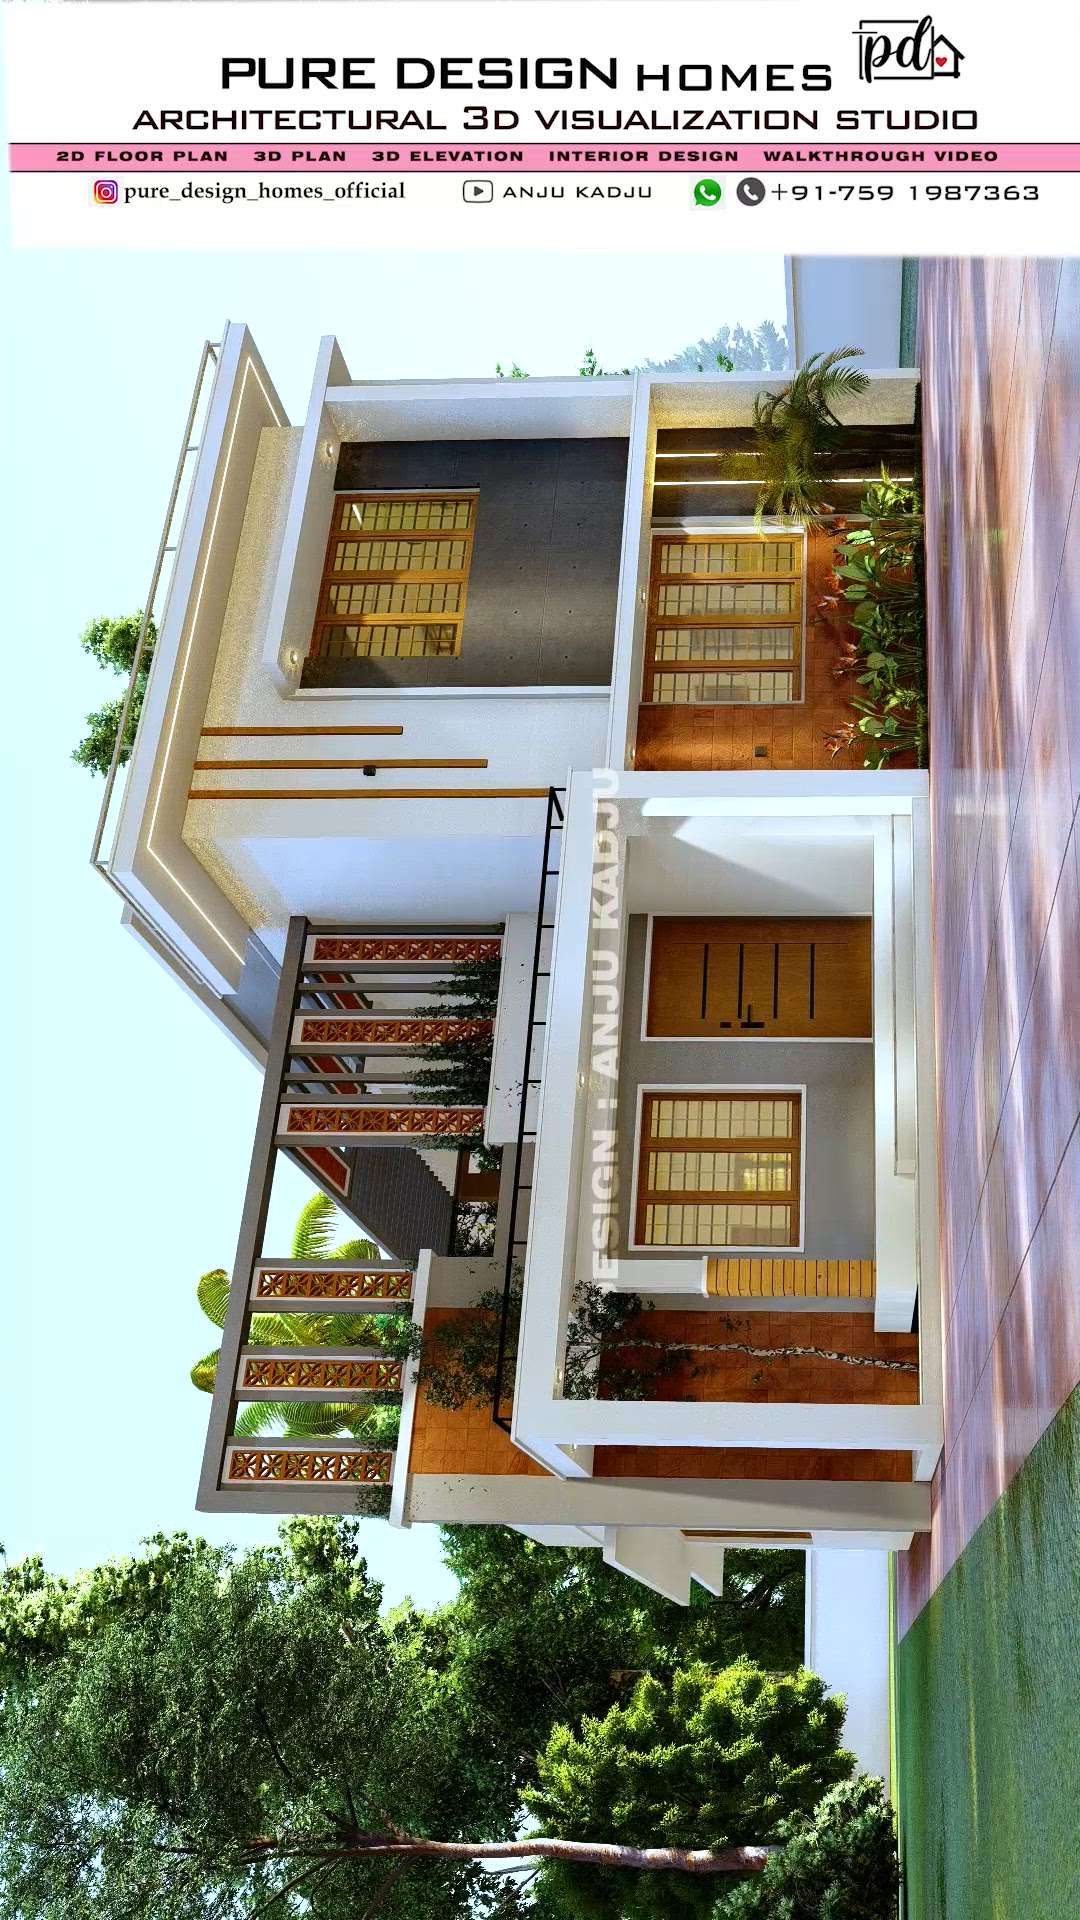 Kerala house design
3 bhk 3d plan with elevation.
Designed by anju kadju
+917591987363
#3dplan #housedesign #3delevation #3bhk #ContemporaryHouse  #house #kerala #online3ddesigner #anjukadju #best3ddesigner

വീടിന്റെ architectural സംബന്ധമായ plan, 3d plan, 3d elevation, interior design, walkthrogh video തുടങ്ങിയ services ആണ് ഞങ്ങളിൽ നിന്നും നിങ്ങൾക്കു ലഭിക്കുക.
കൂടുതൽ വിവരങ്ങൾക്ക് ഞങ്ങളുടെ whatsapp / instagramil ബന്ധപ്പെടാം 👍🏻.
കൃത്യമായി എന്താണ് ആവശ്യം എന്ന് 🙏🏻ചേർത്ത് ലഭിക്കുന്ന എല്ലാം message കൾക്കും ഞങ്ങൾ reply നൽകുന്നതാണ് 👍🏻👍🏻👍🏻